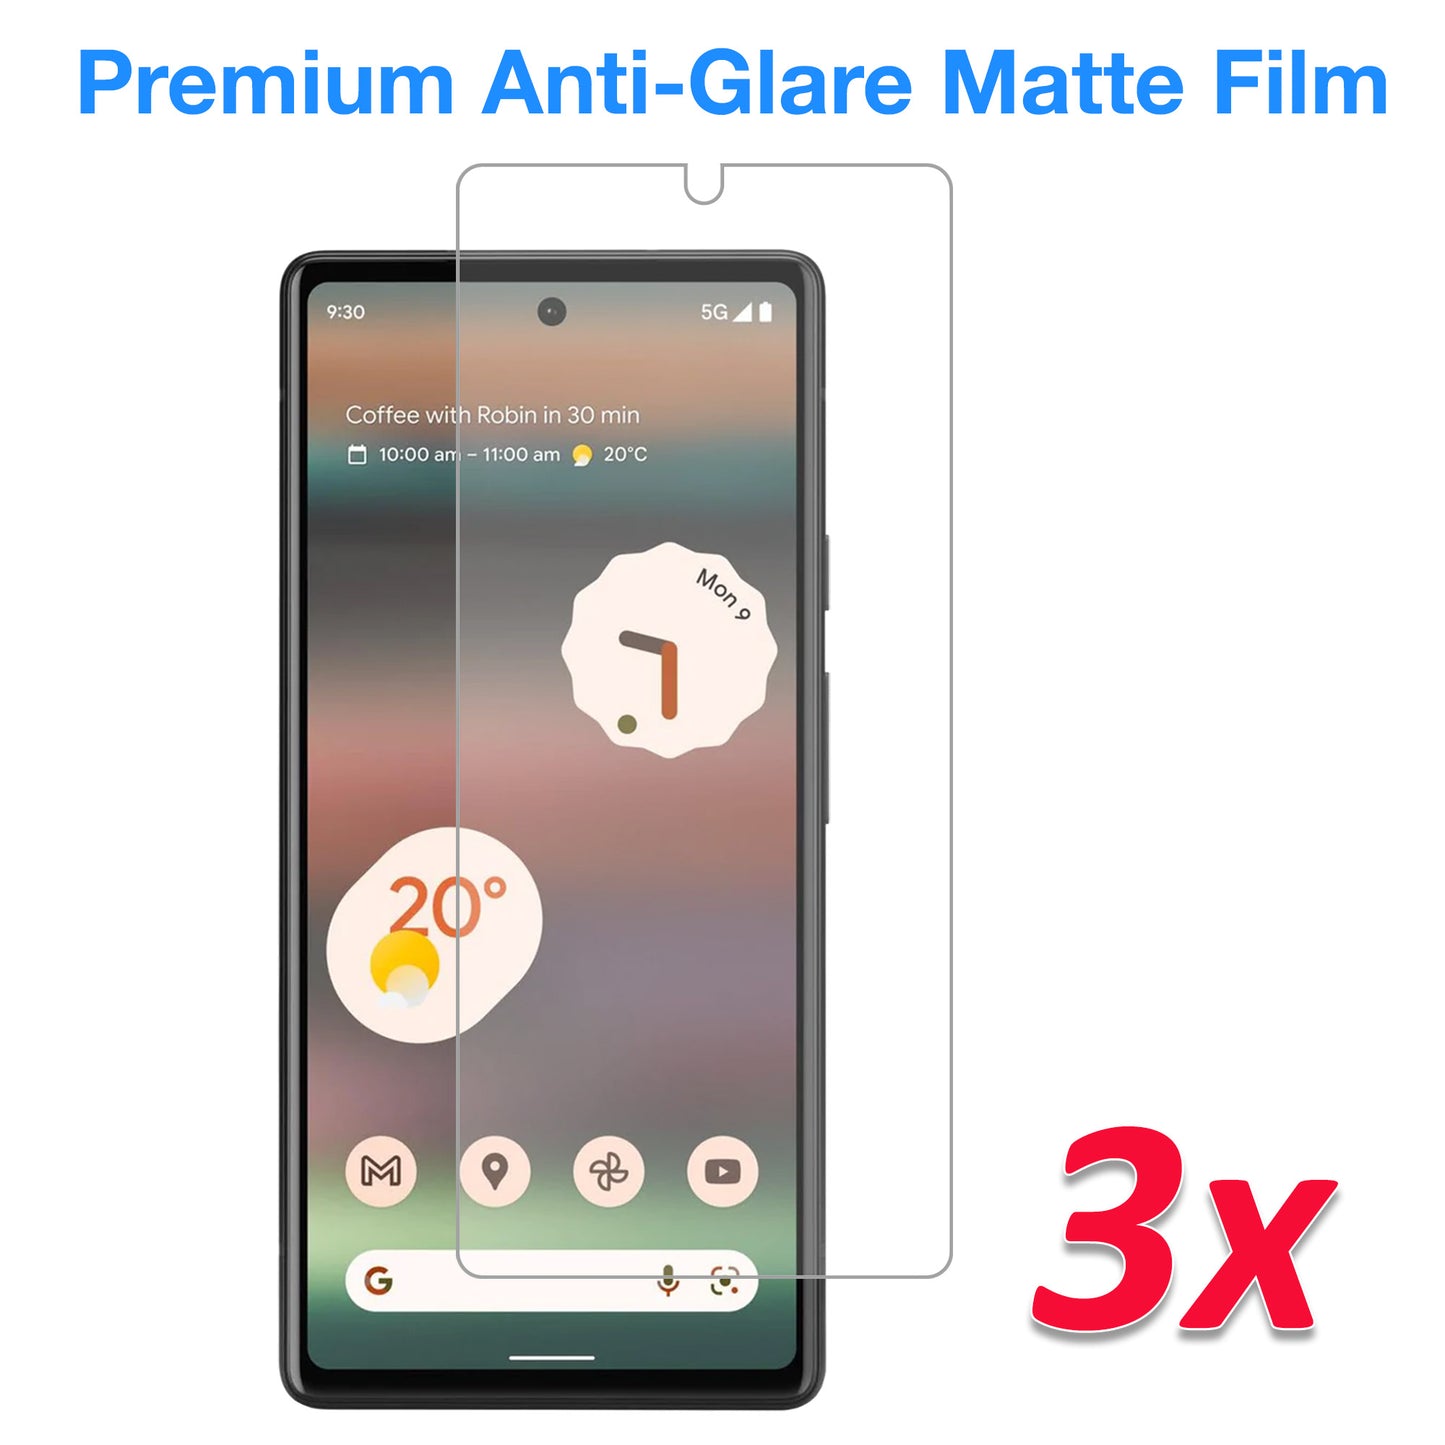 [3 Pack] MEZON Google Pixel 6a (6.1") Anti-Glare Matte Screen Protector Case Friendly Film (Pixel 6a, Matte)